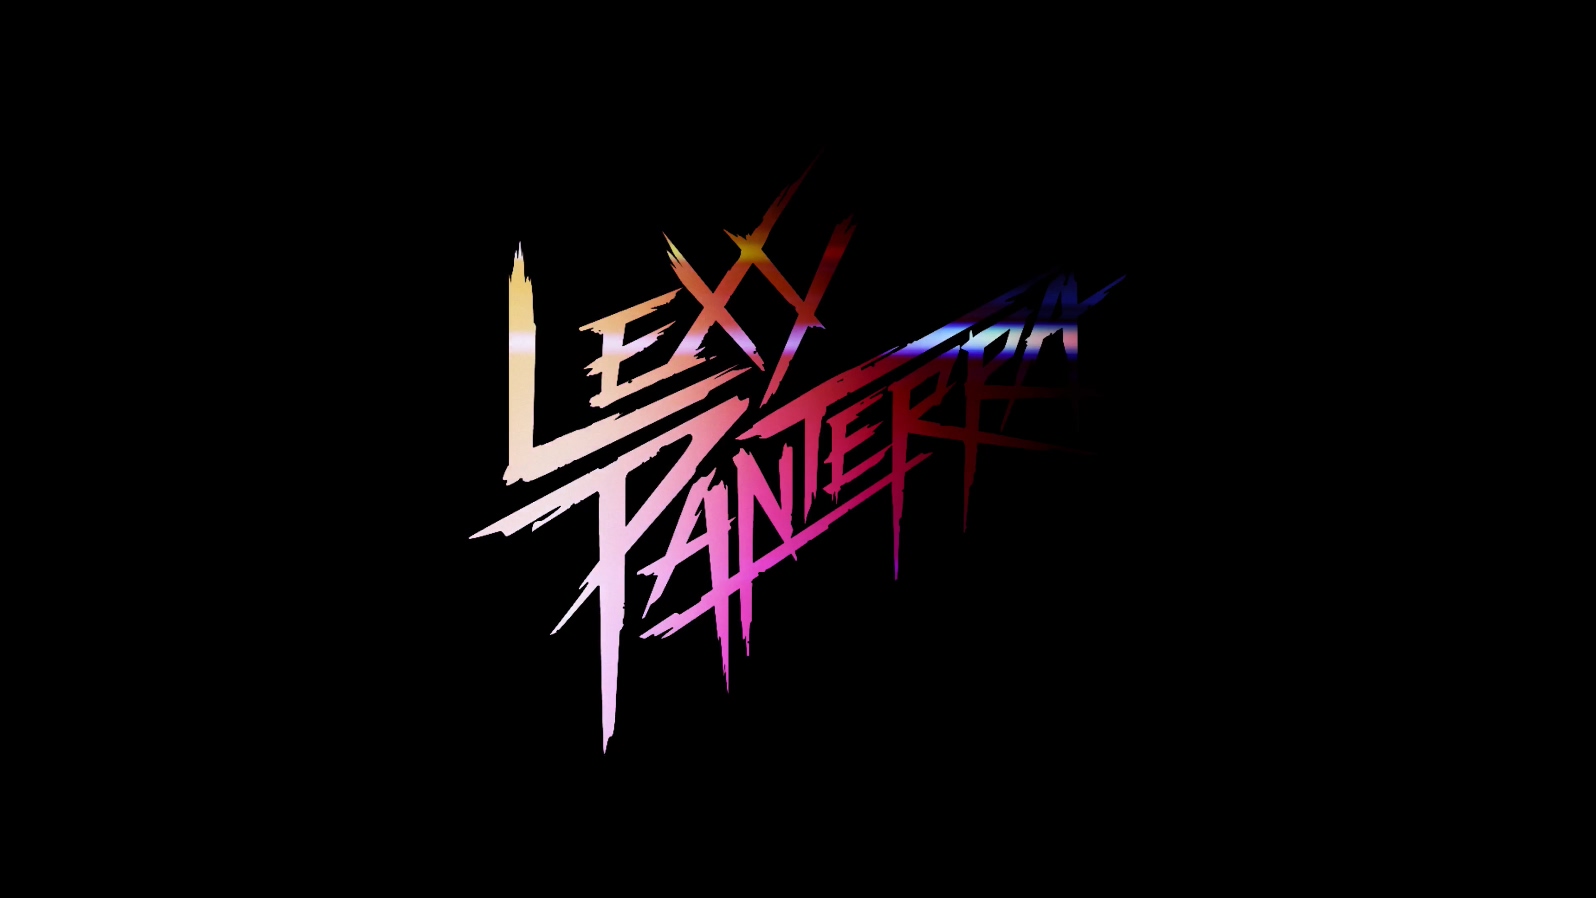 Lexy Panterra - Used to Know (Twerk Freest<x>yle) - 4K - 1080